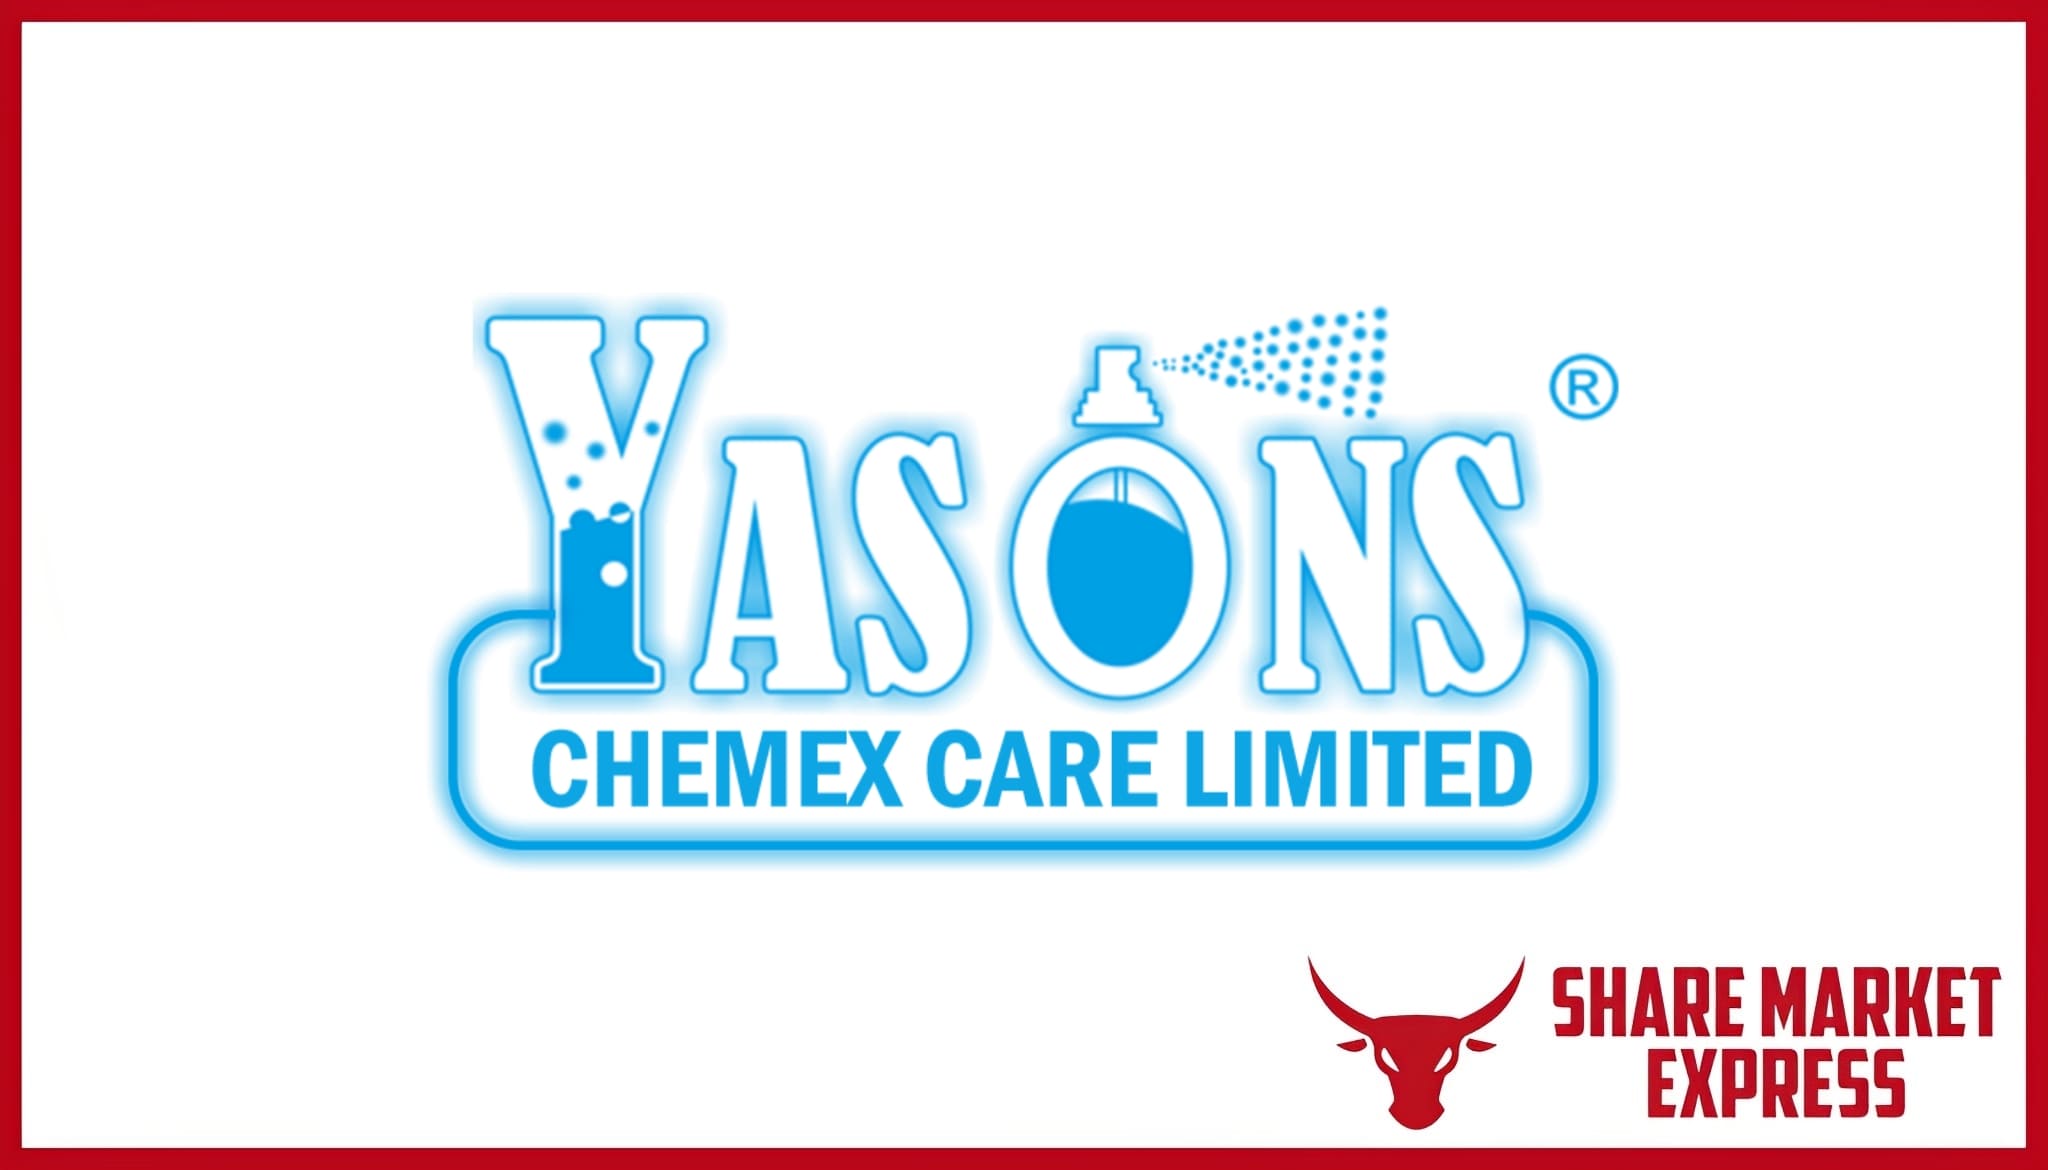 Yasons Chemex Care IPO